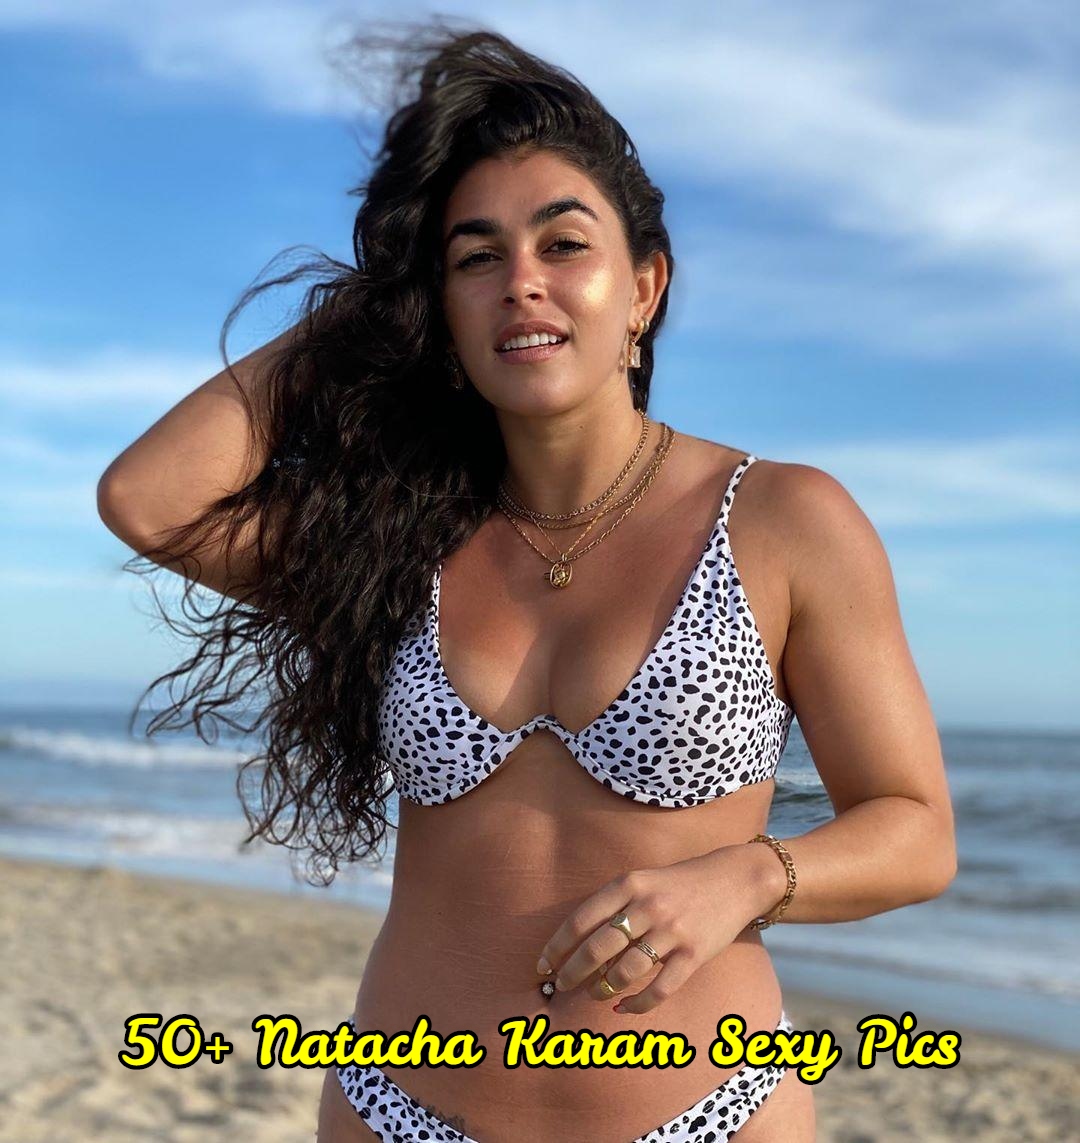 Natacha Karam Sexy Pics